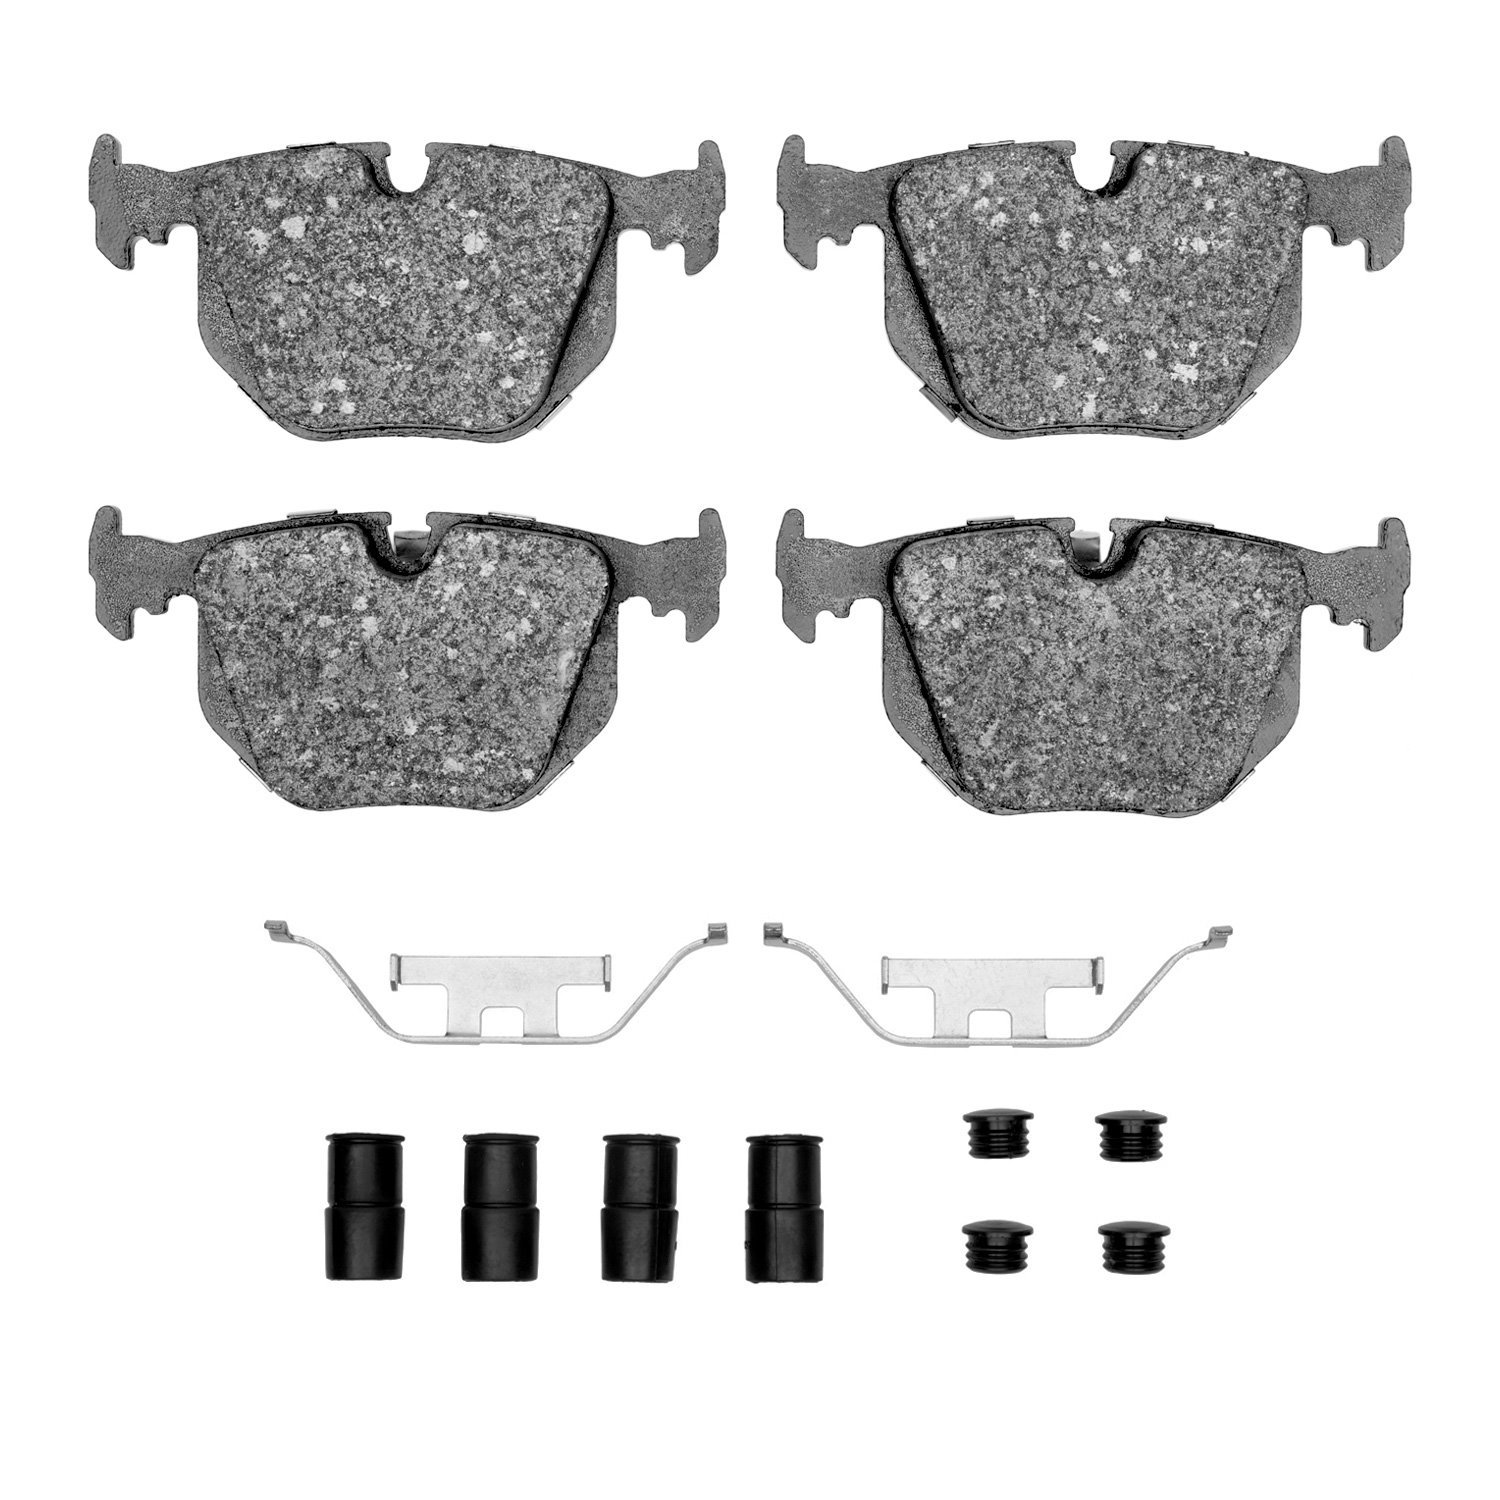 Semi-Metallic Brake Pads & Hardware Kit, 1991-2010 Fits Multiple Makes/Models, Position: Rear